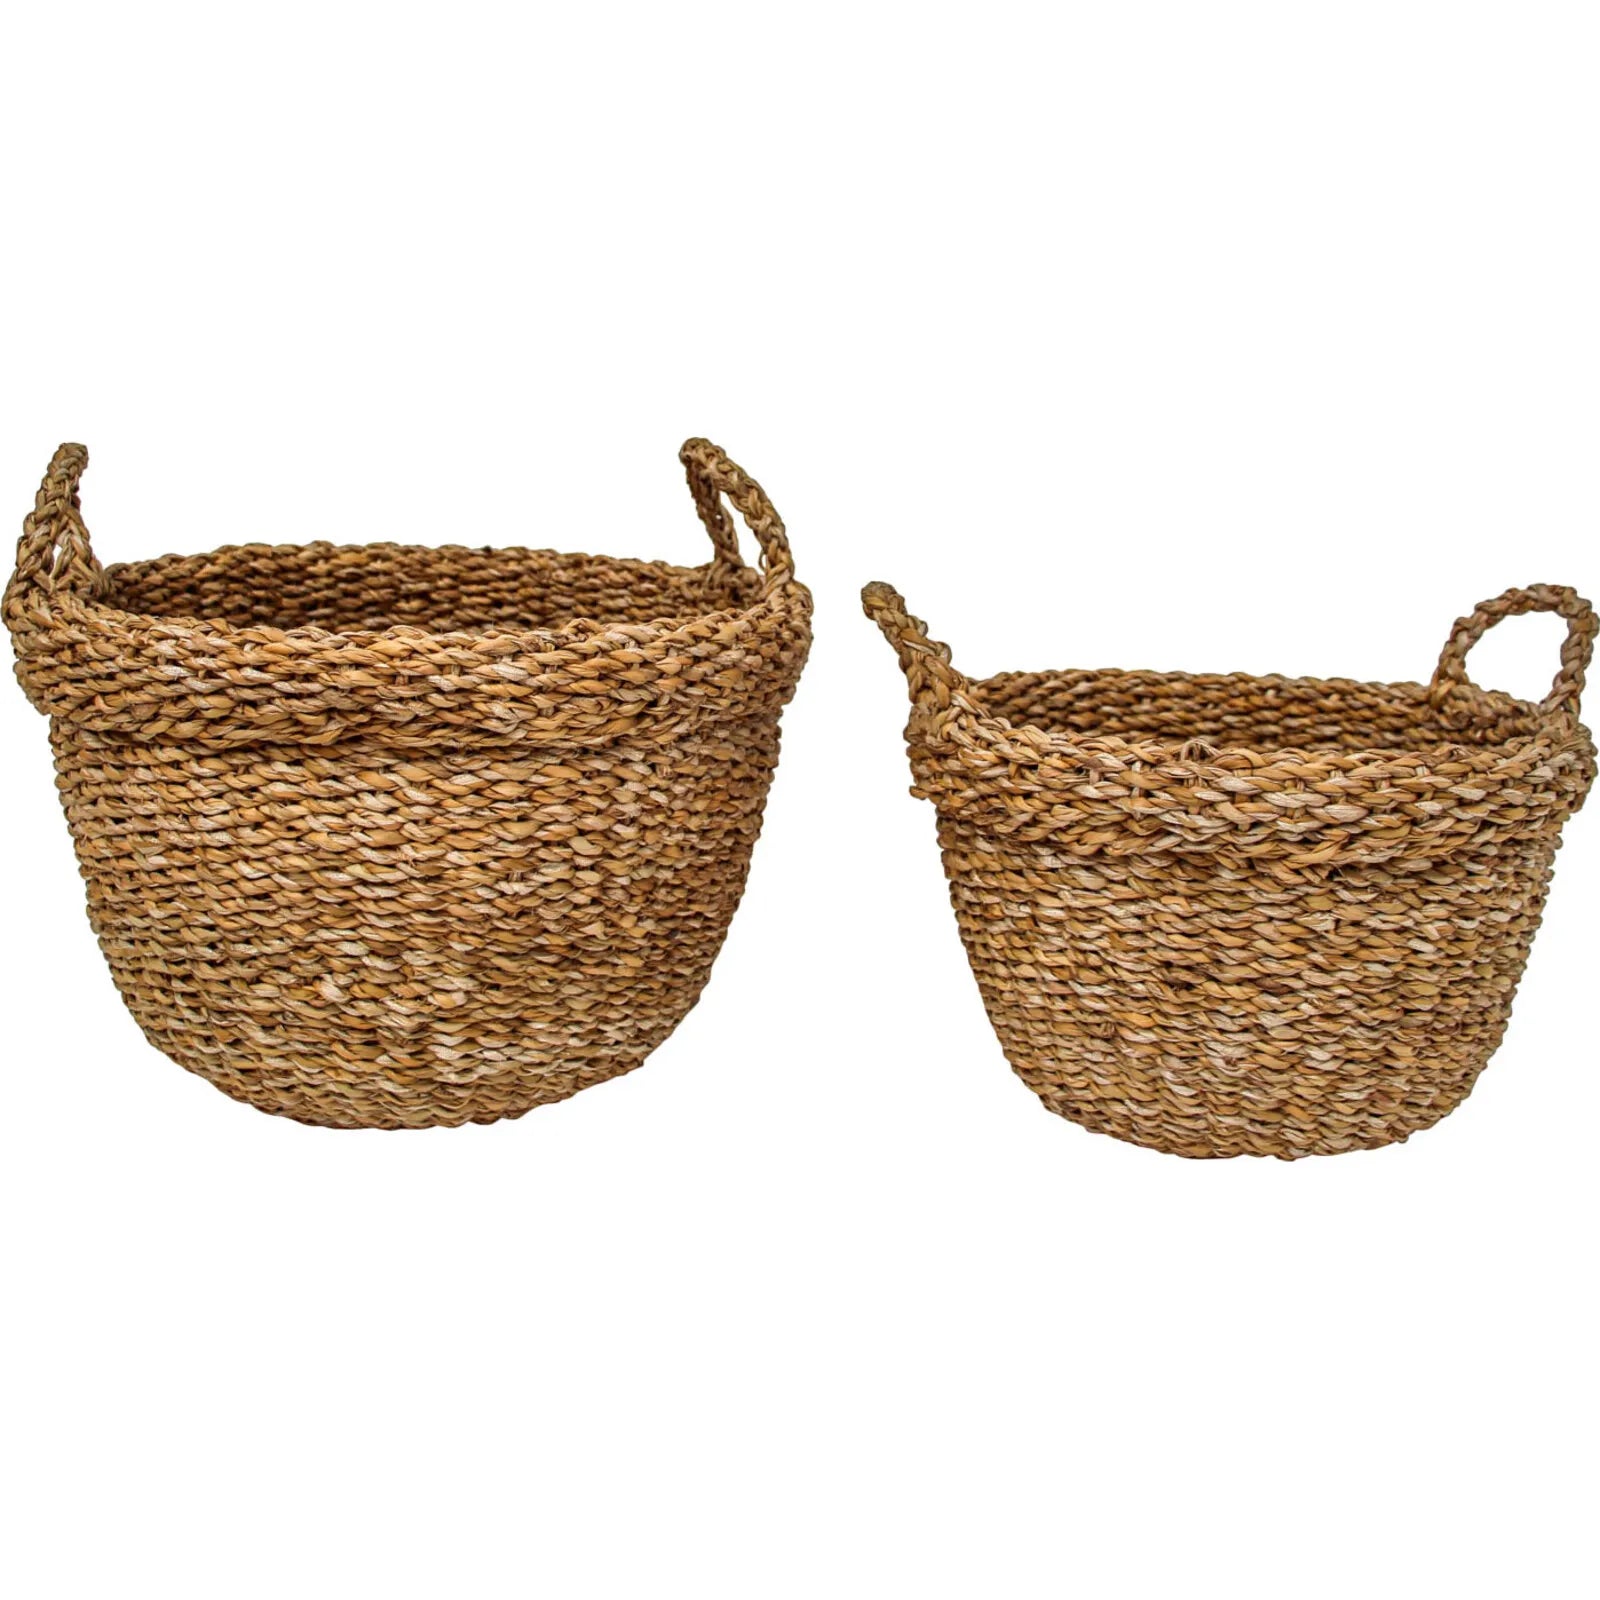 Seagrass Tub Basket